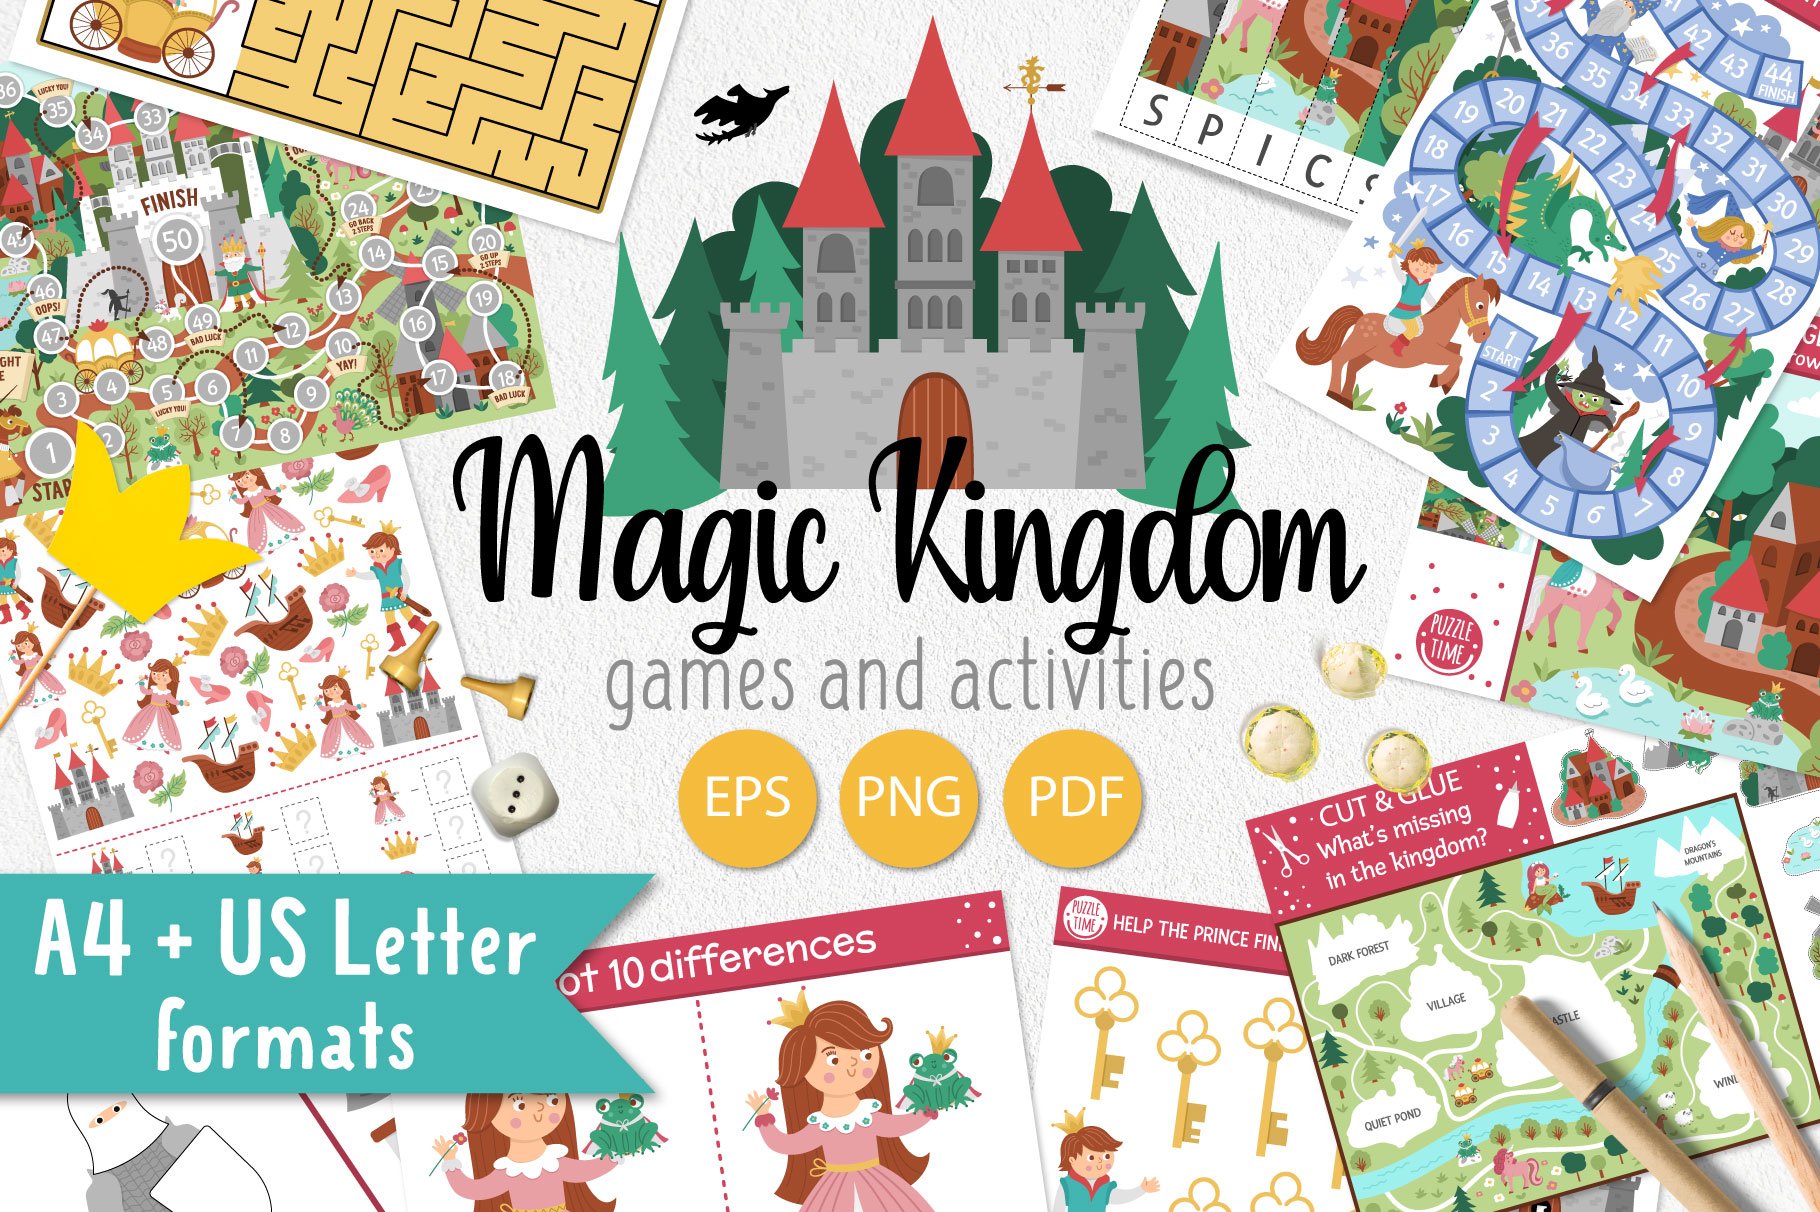 Magic Kingdom games cover image.